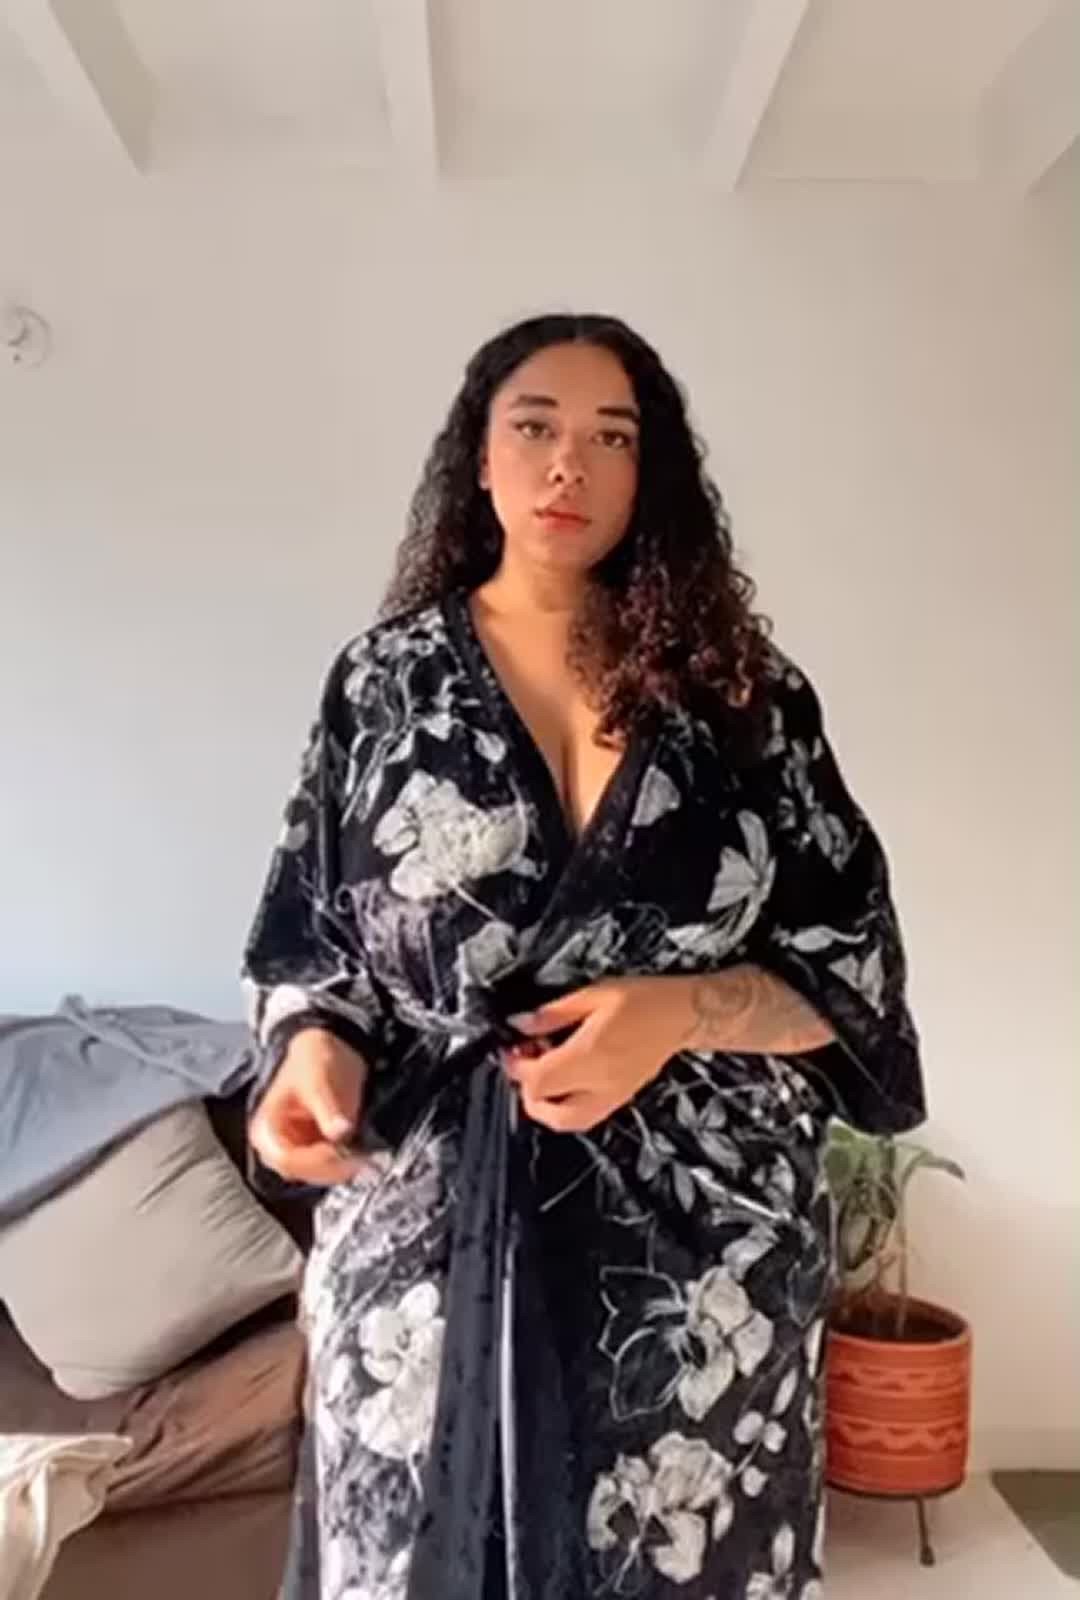 Video post by Brittney9